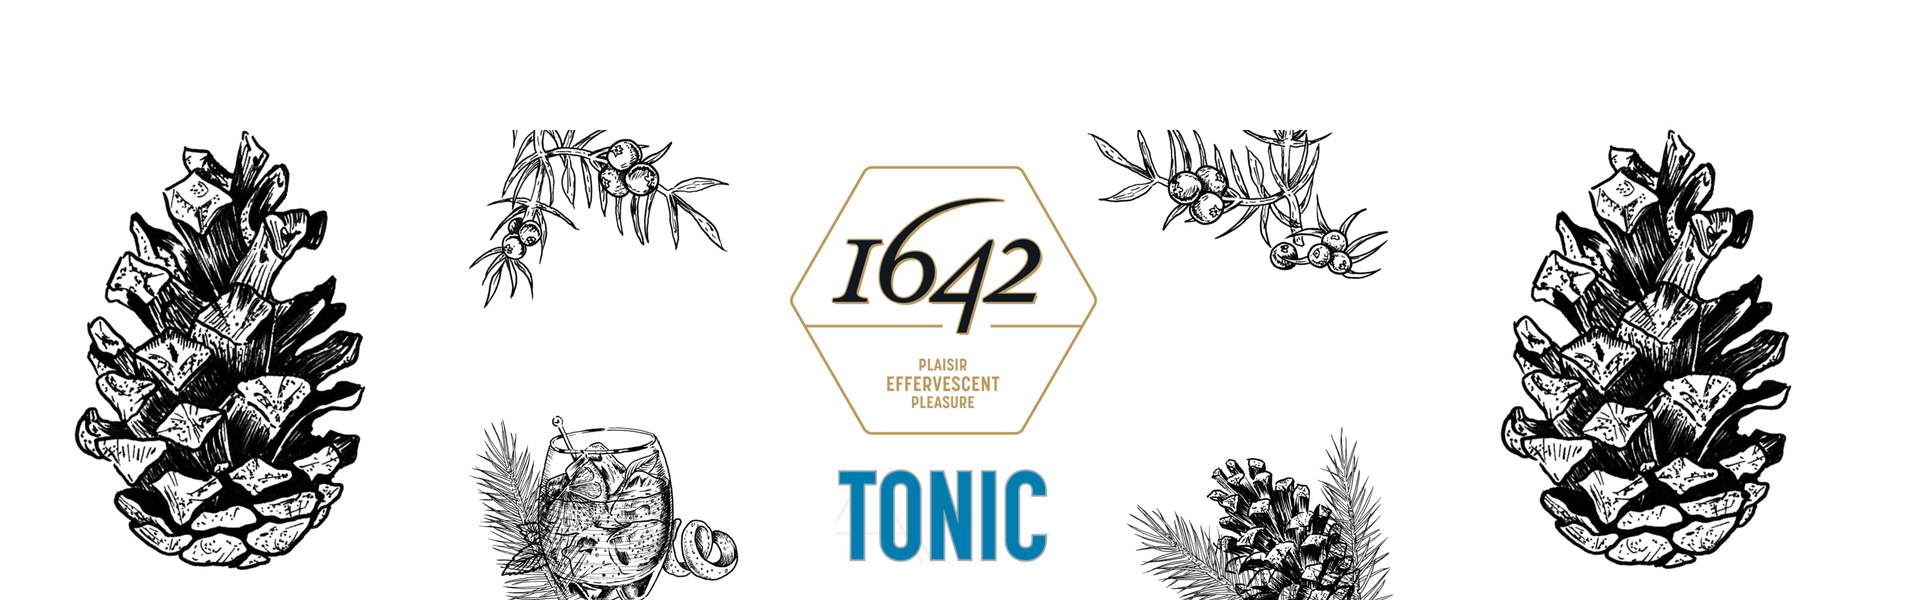 Tonic 1642